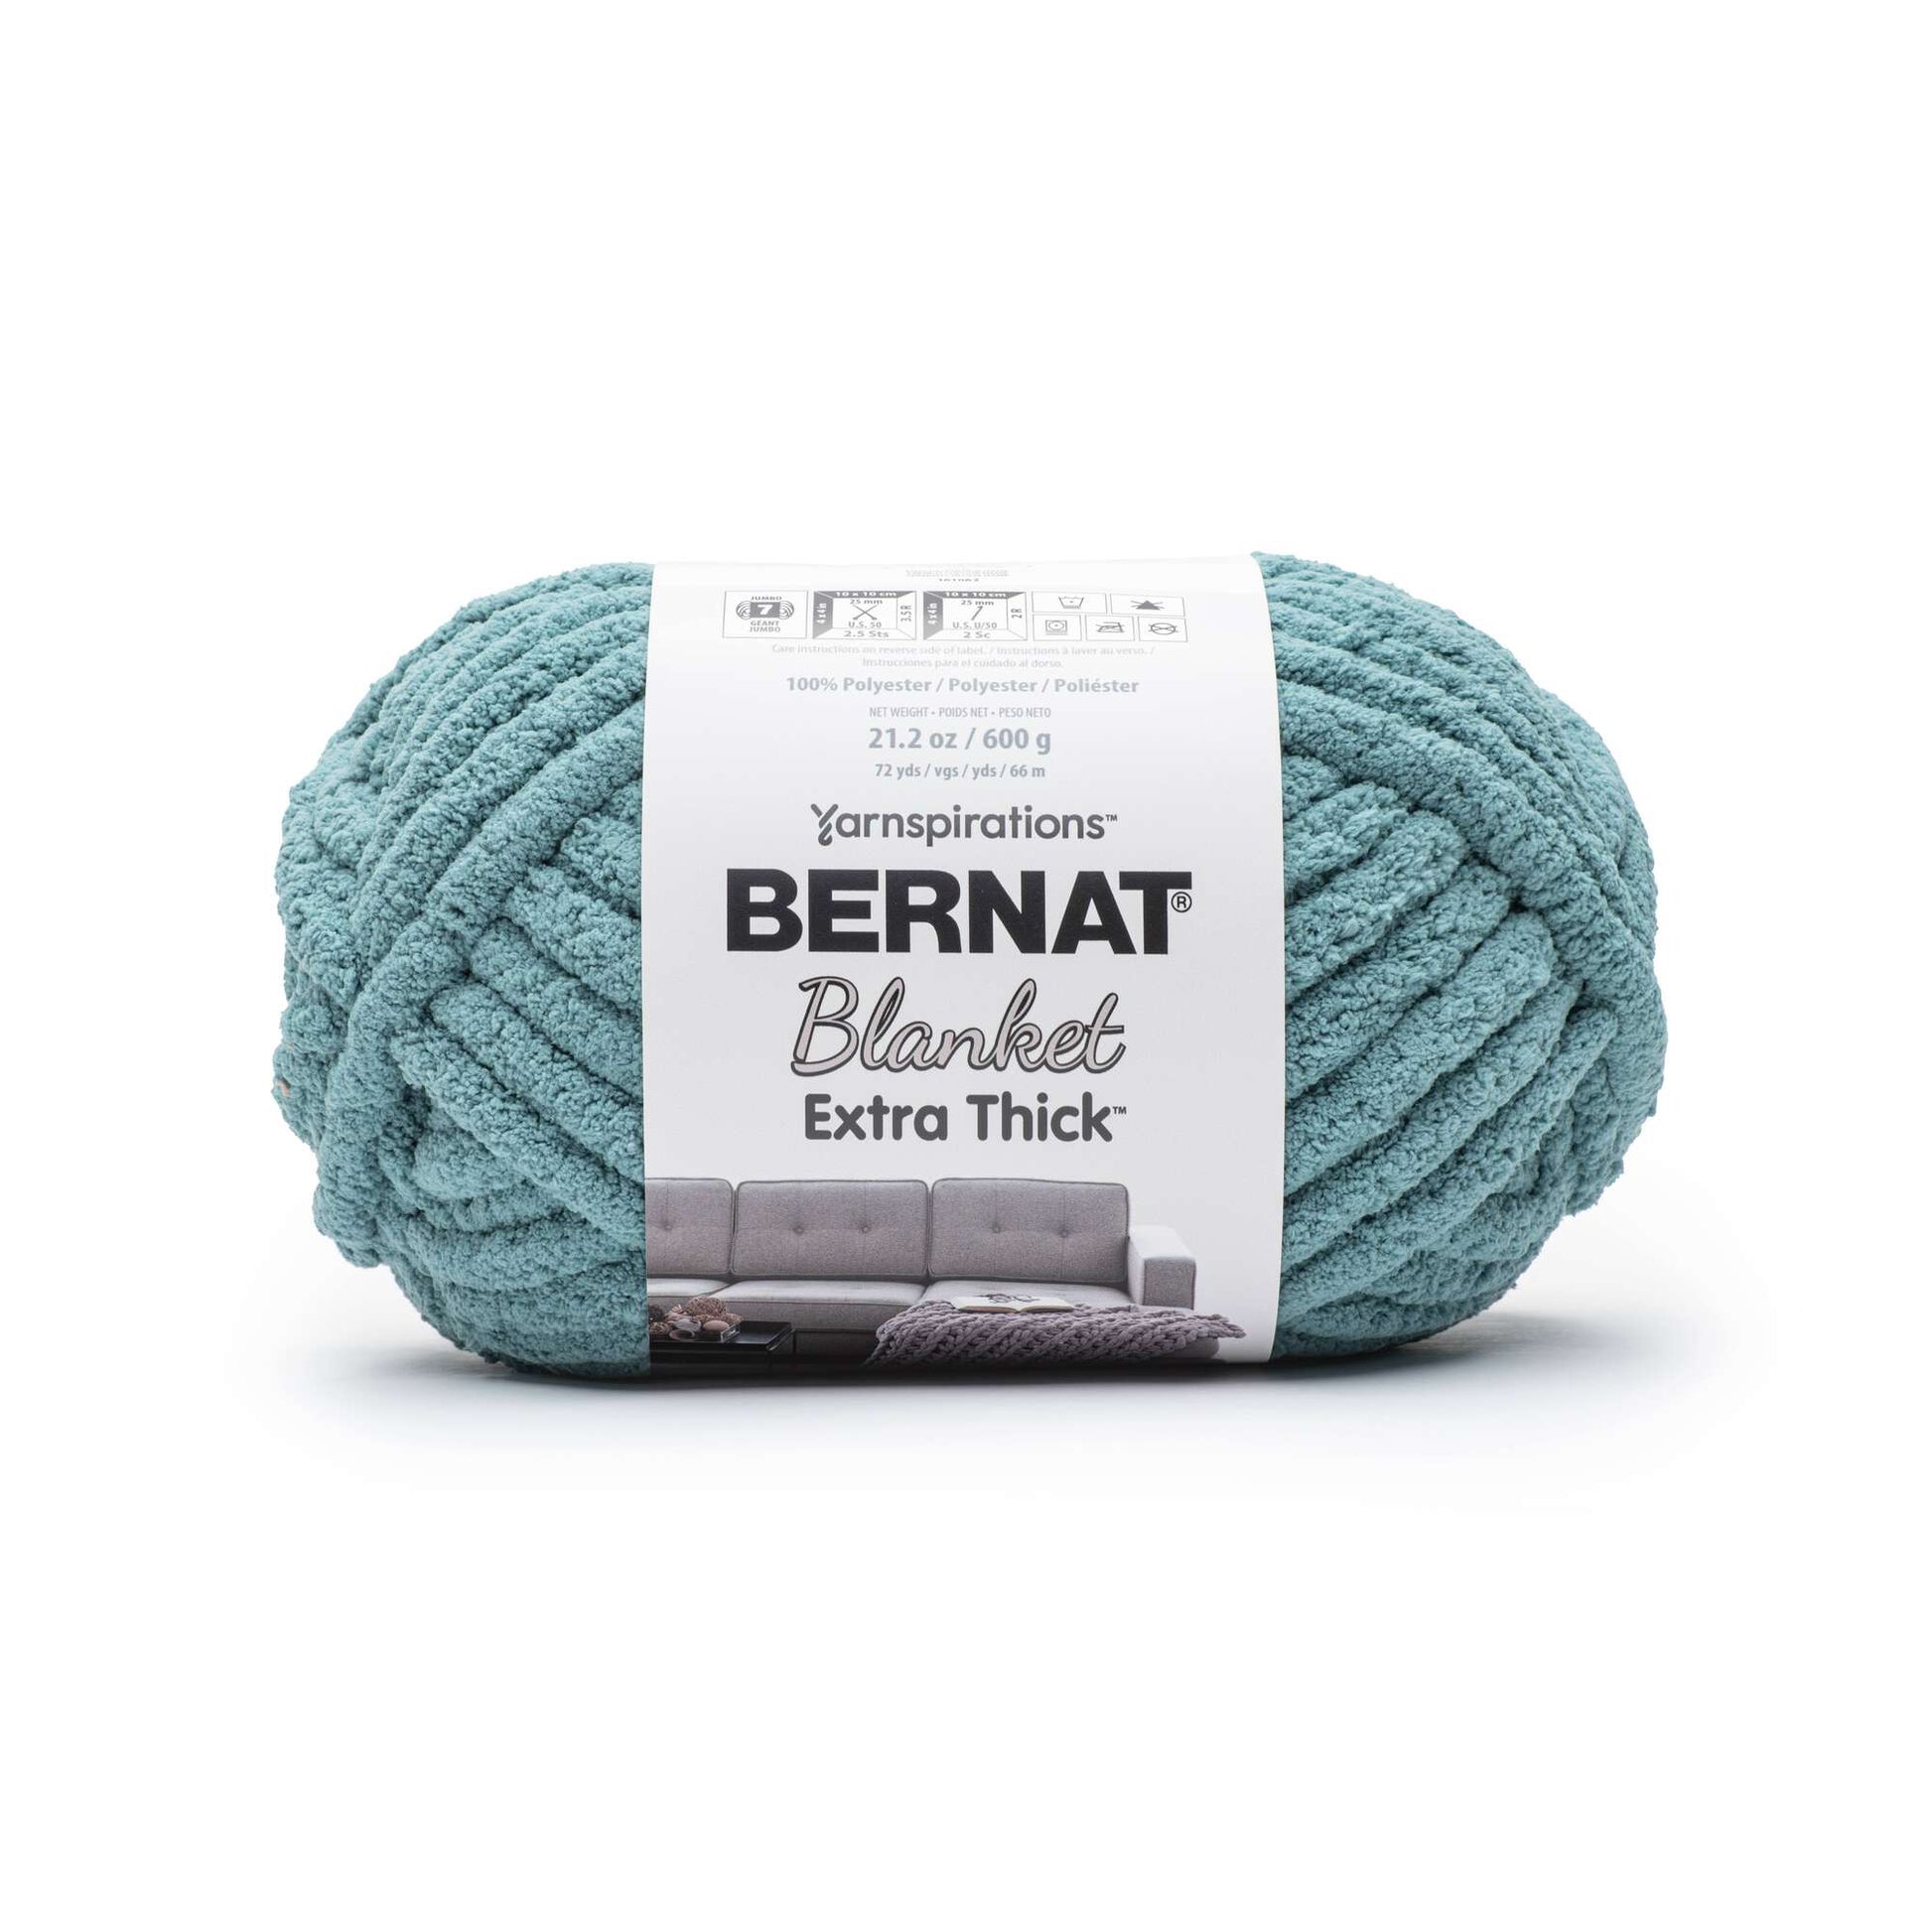 Bernat Blanket Extra Thick Yarn (600g/21.2oz) - Discontinued Shades Teal Moss